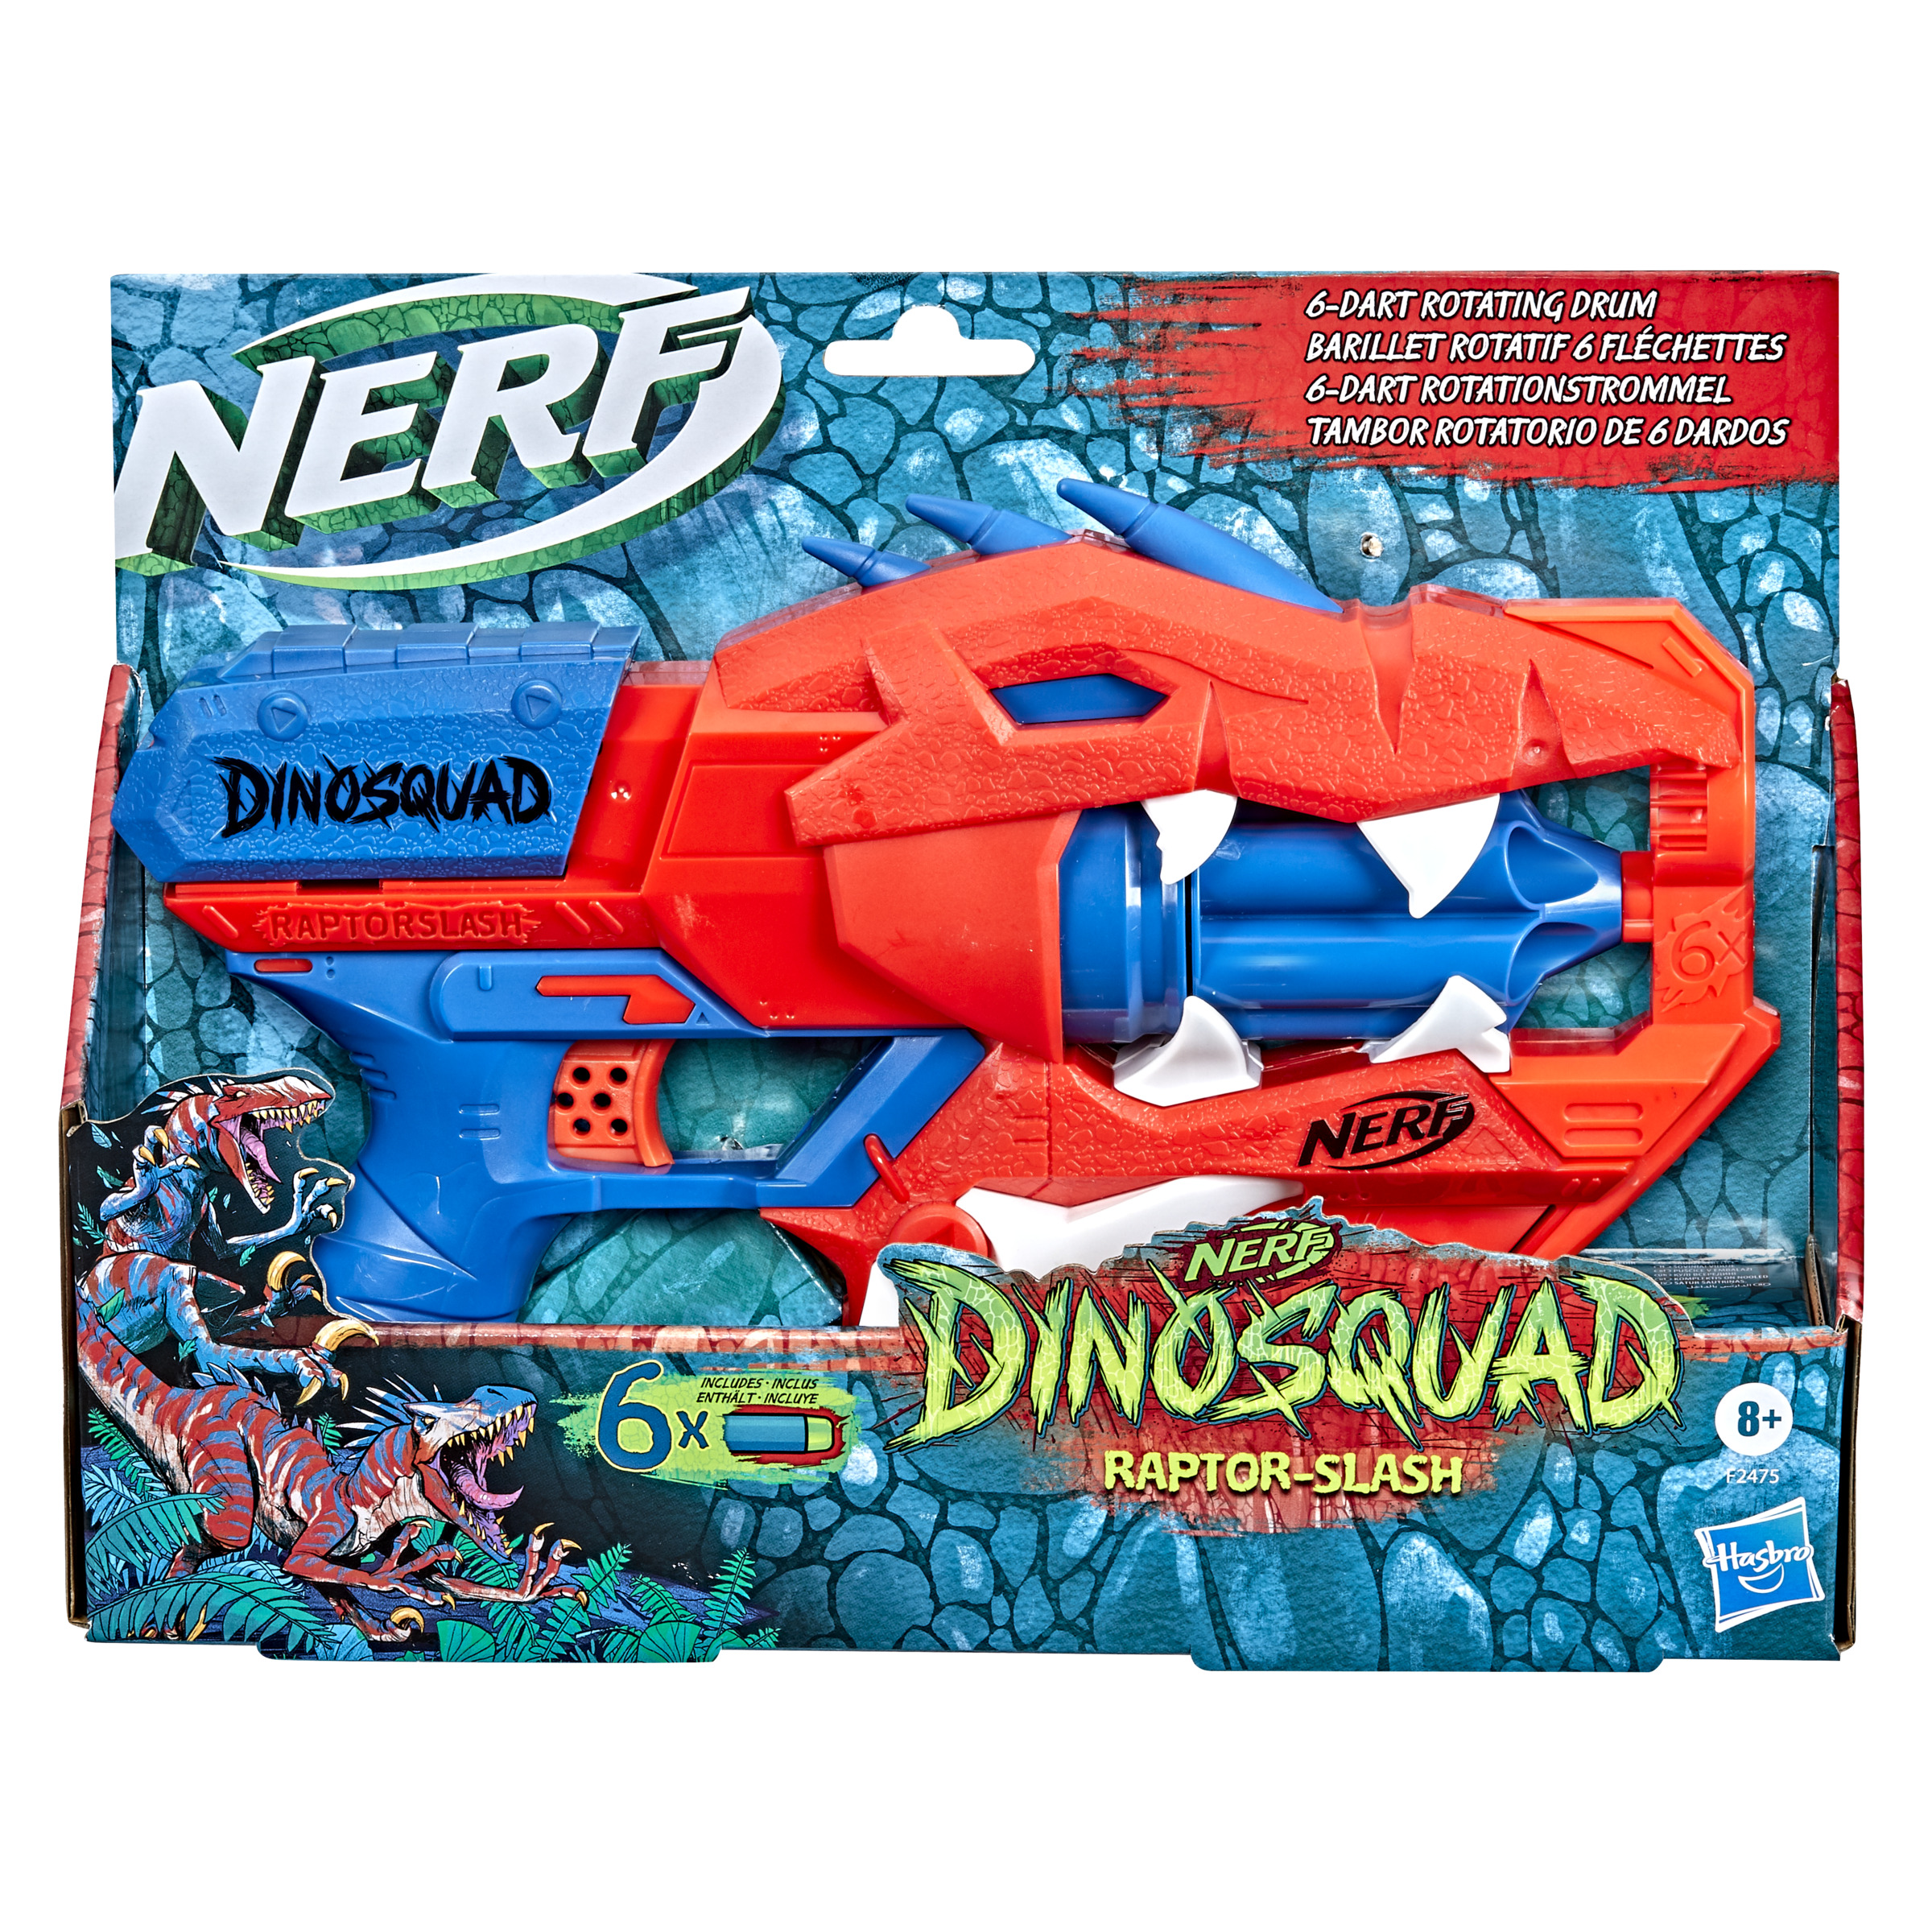 Lanzador Nerf Dinosquad Raptor-slash  MKP